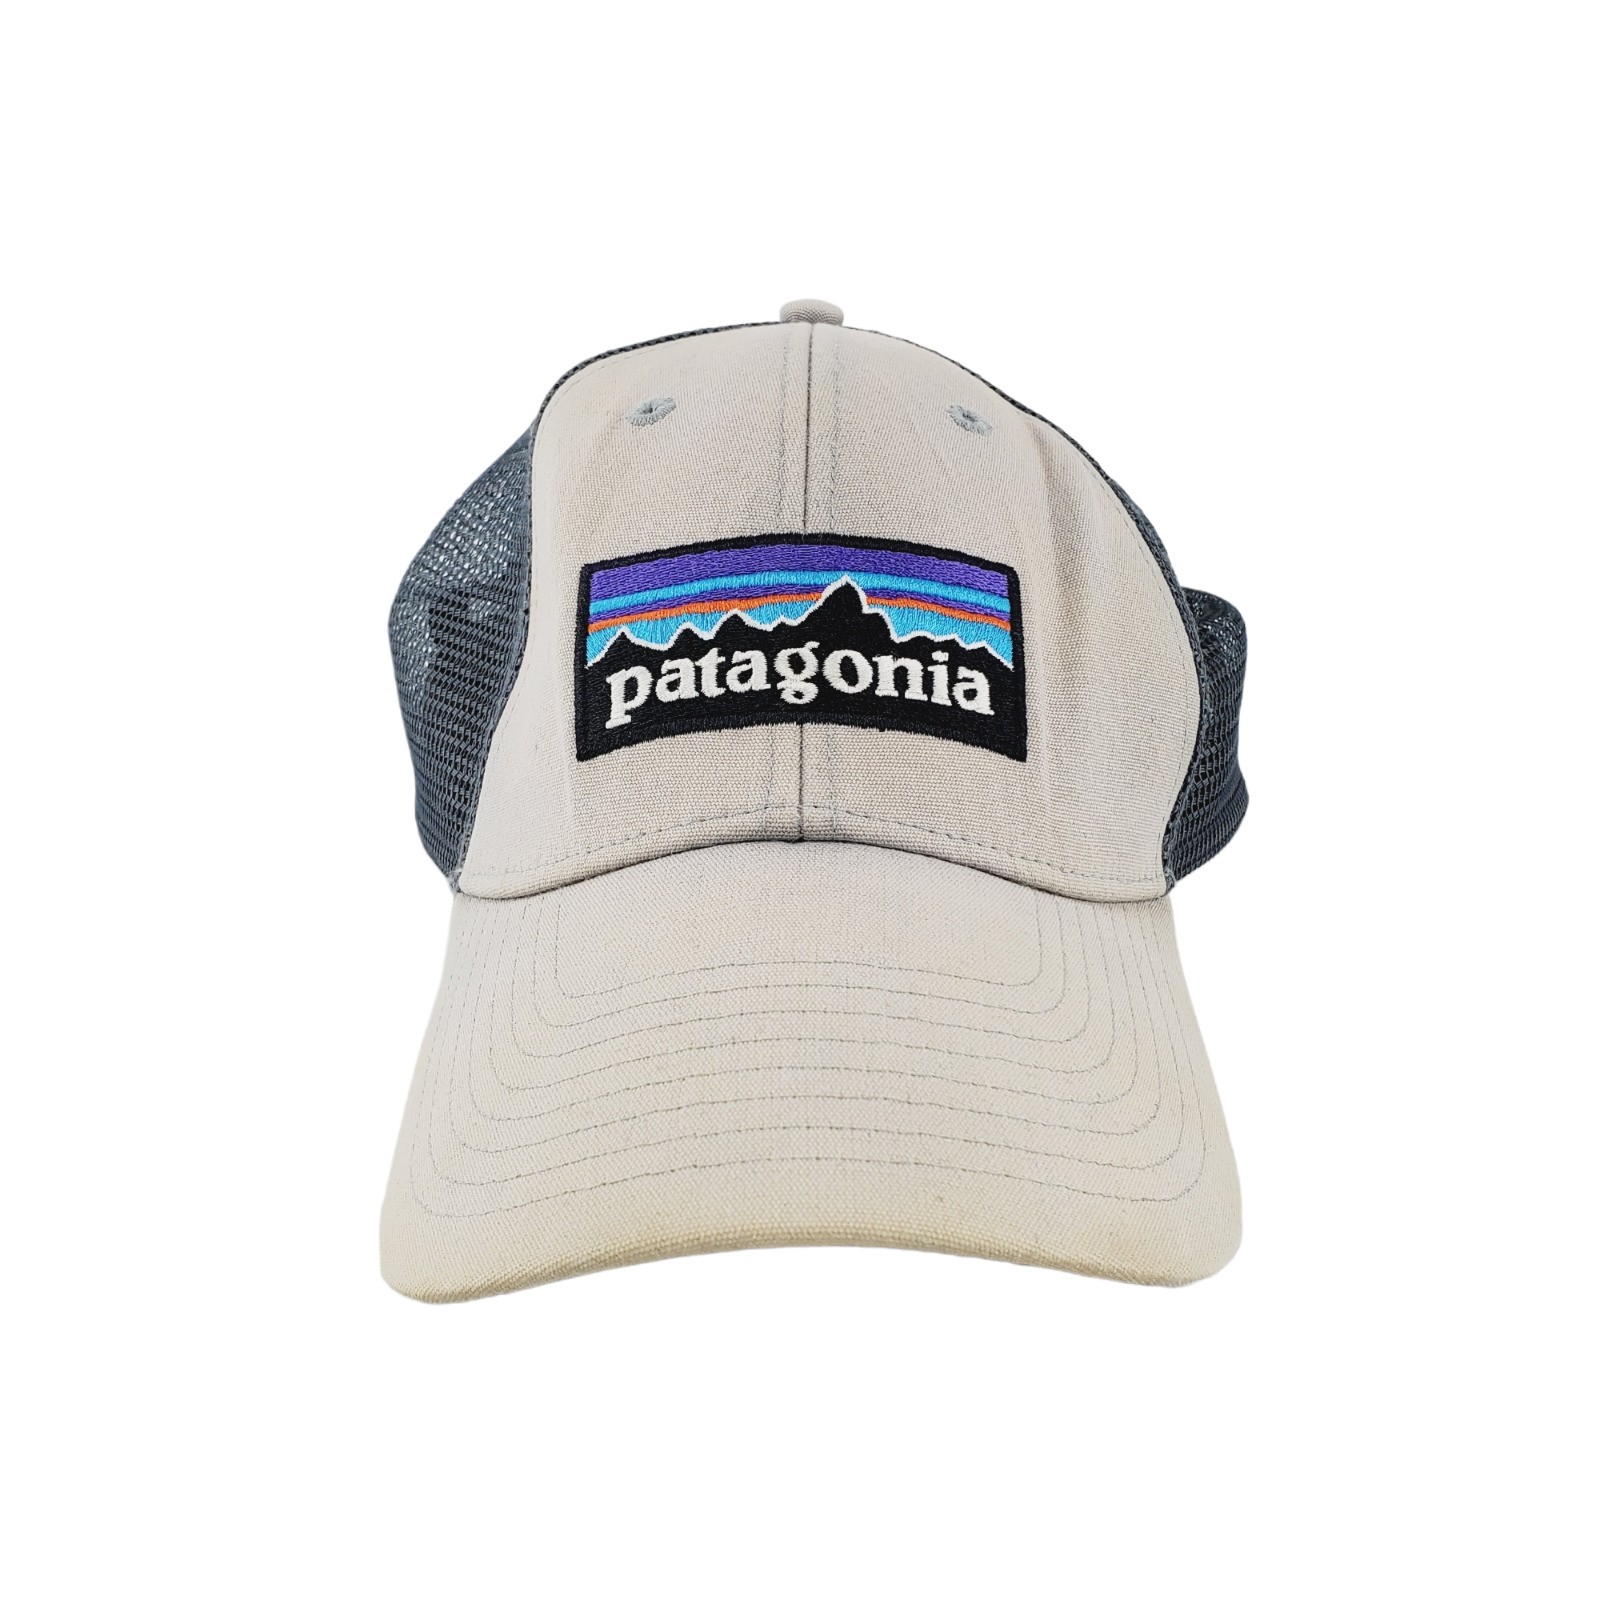 Patagonia Baseball Cap Hat Lid Mesh Snapback Gray Outdoor Sports Hiking